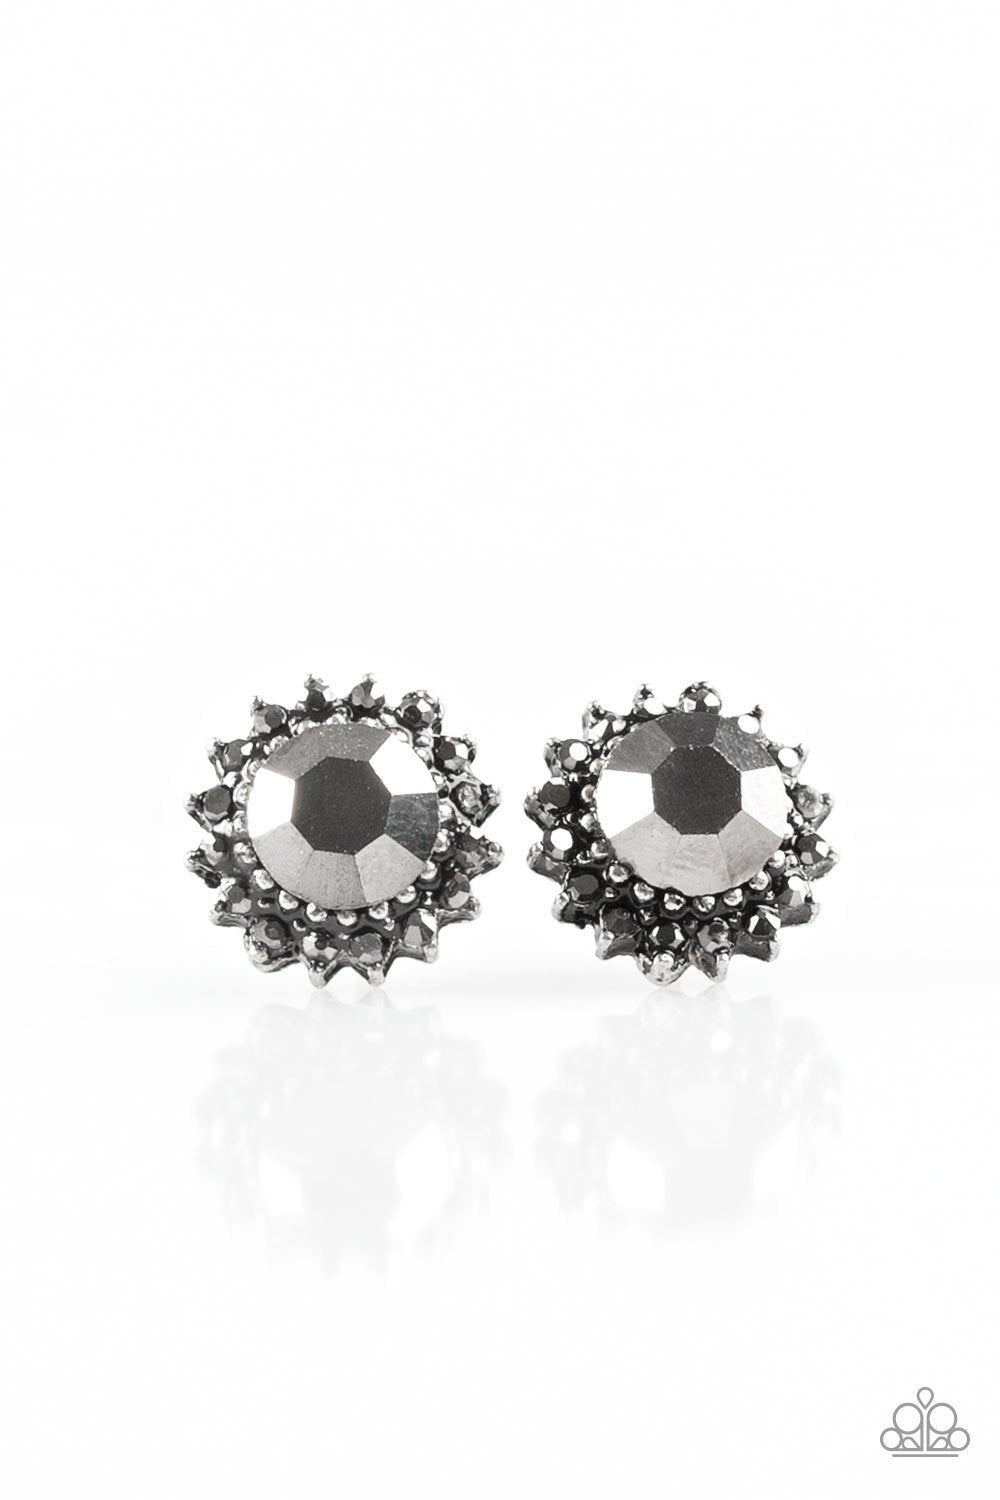 Away We Glow Black Hematite Post Earrings - Paparazzi Accessories-CarasShop.com - $5 Jewelry by Cara Jewels